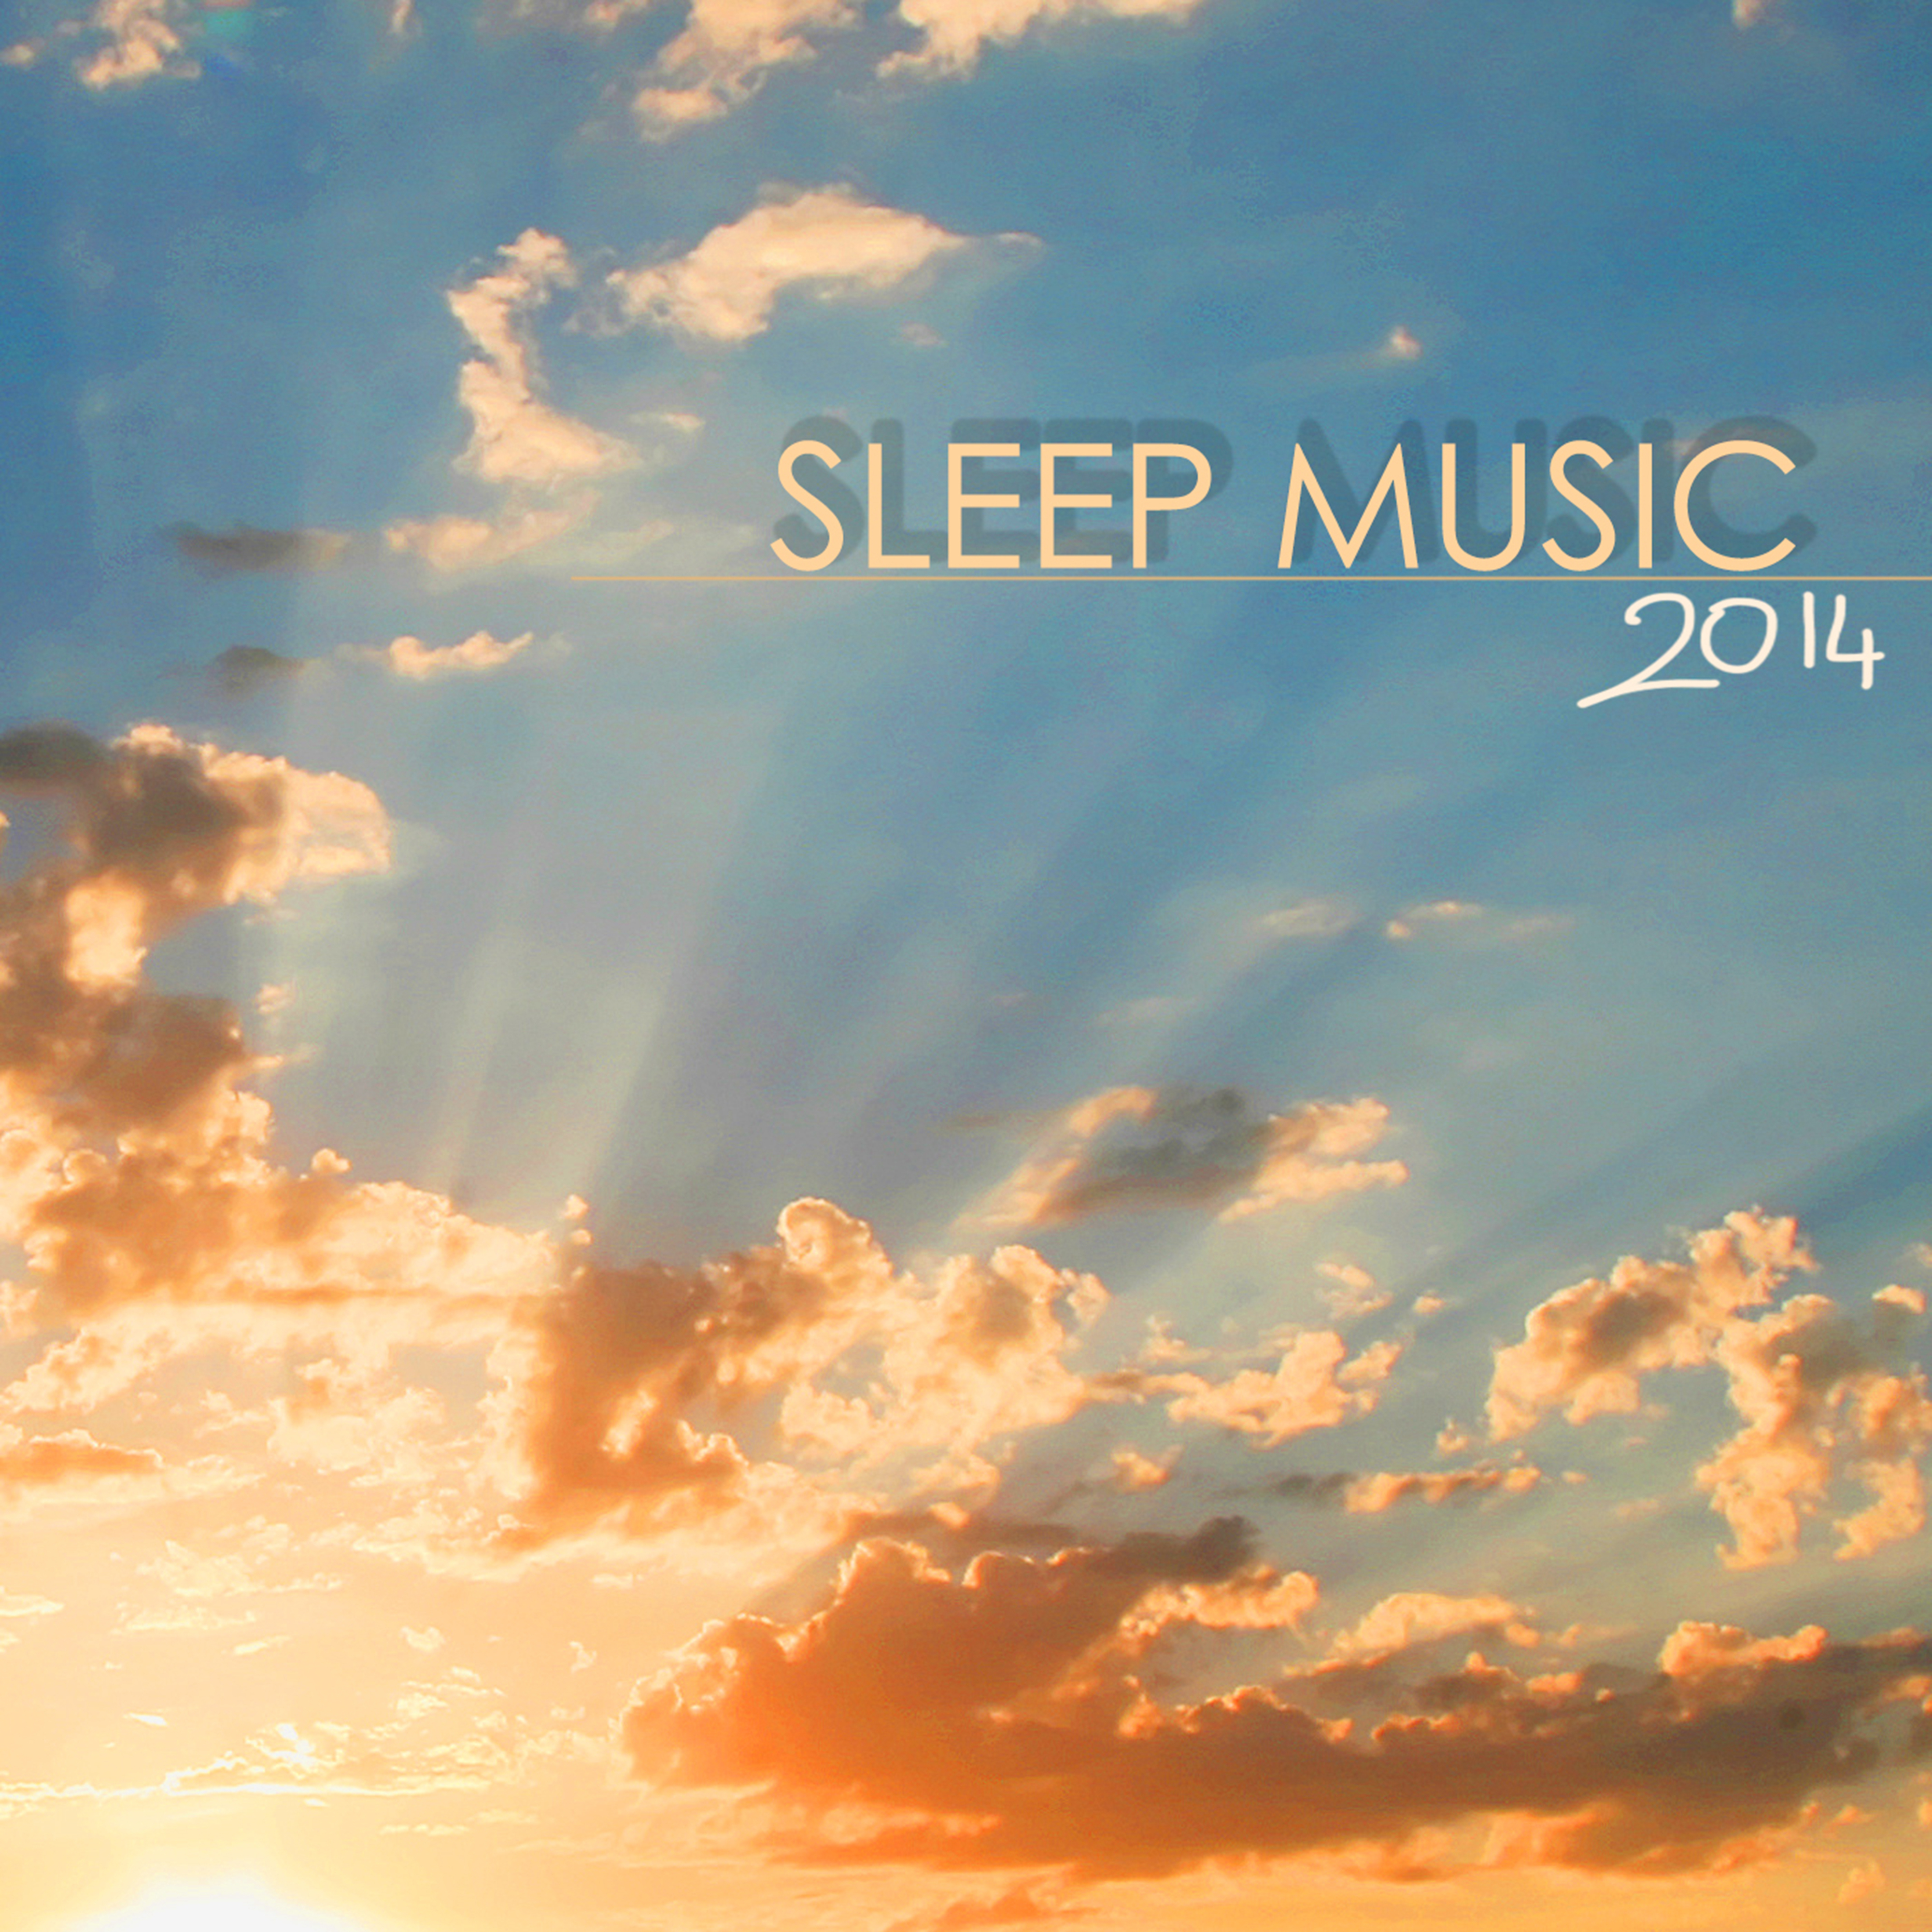 Sleep Music 2014 - Best Music to Sleep & Meditation Songs to Fall Asleep, Sleep Help